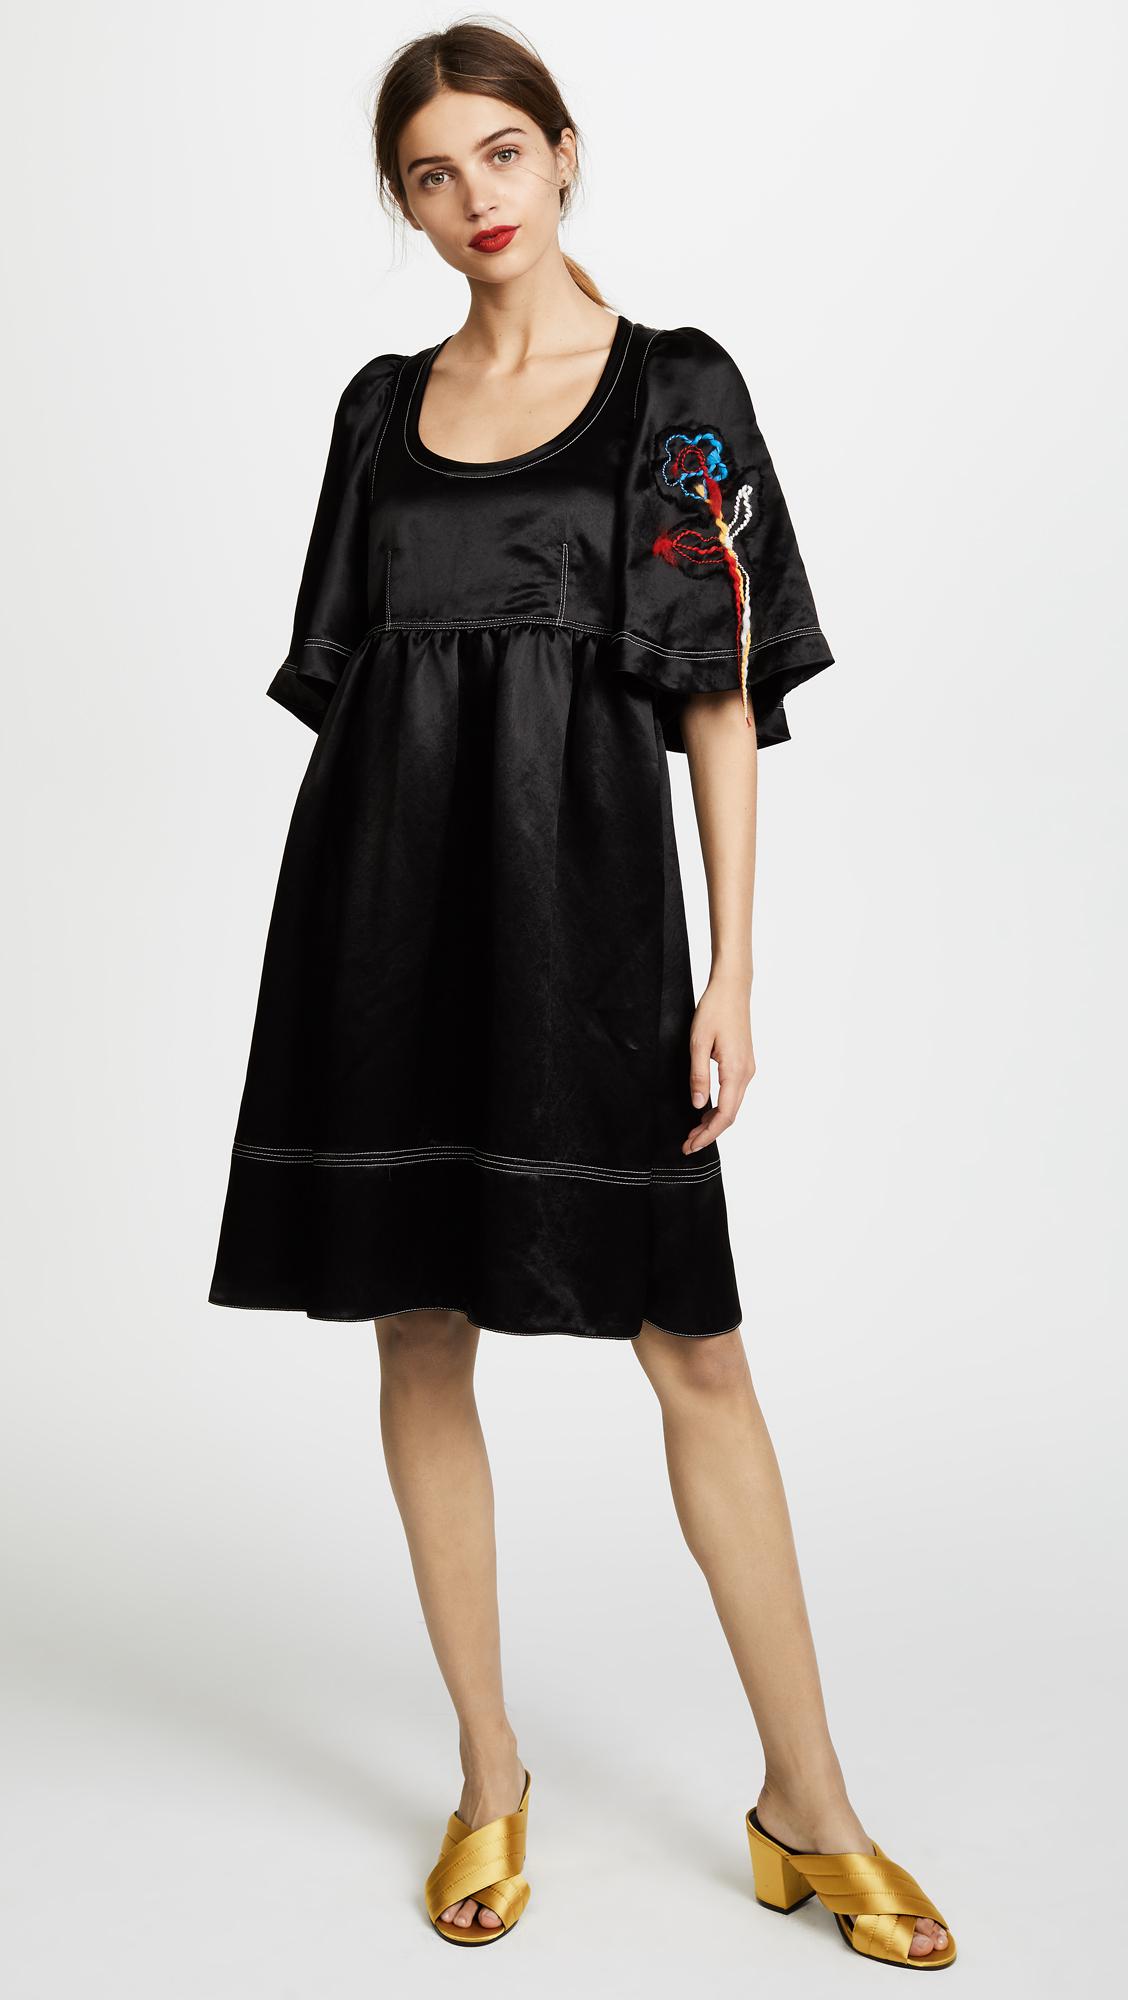 Lyst - Sonia Rykiel Embroidered Short Dress in Black